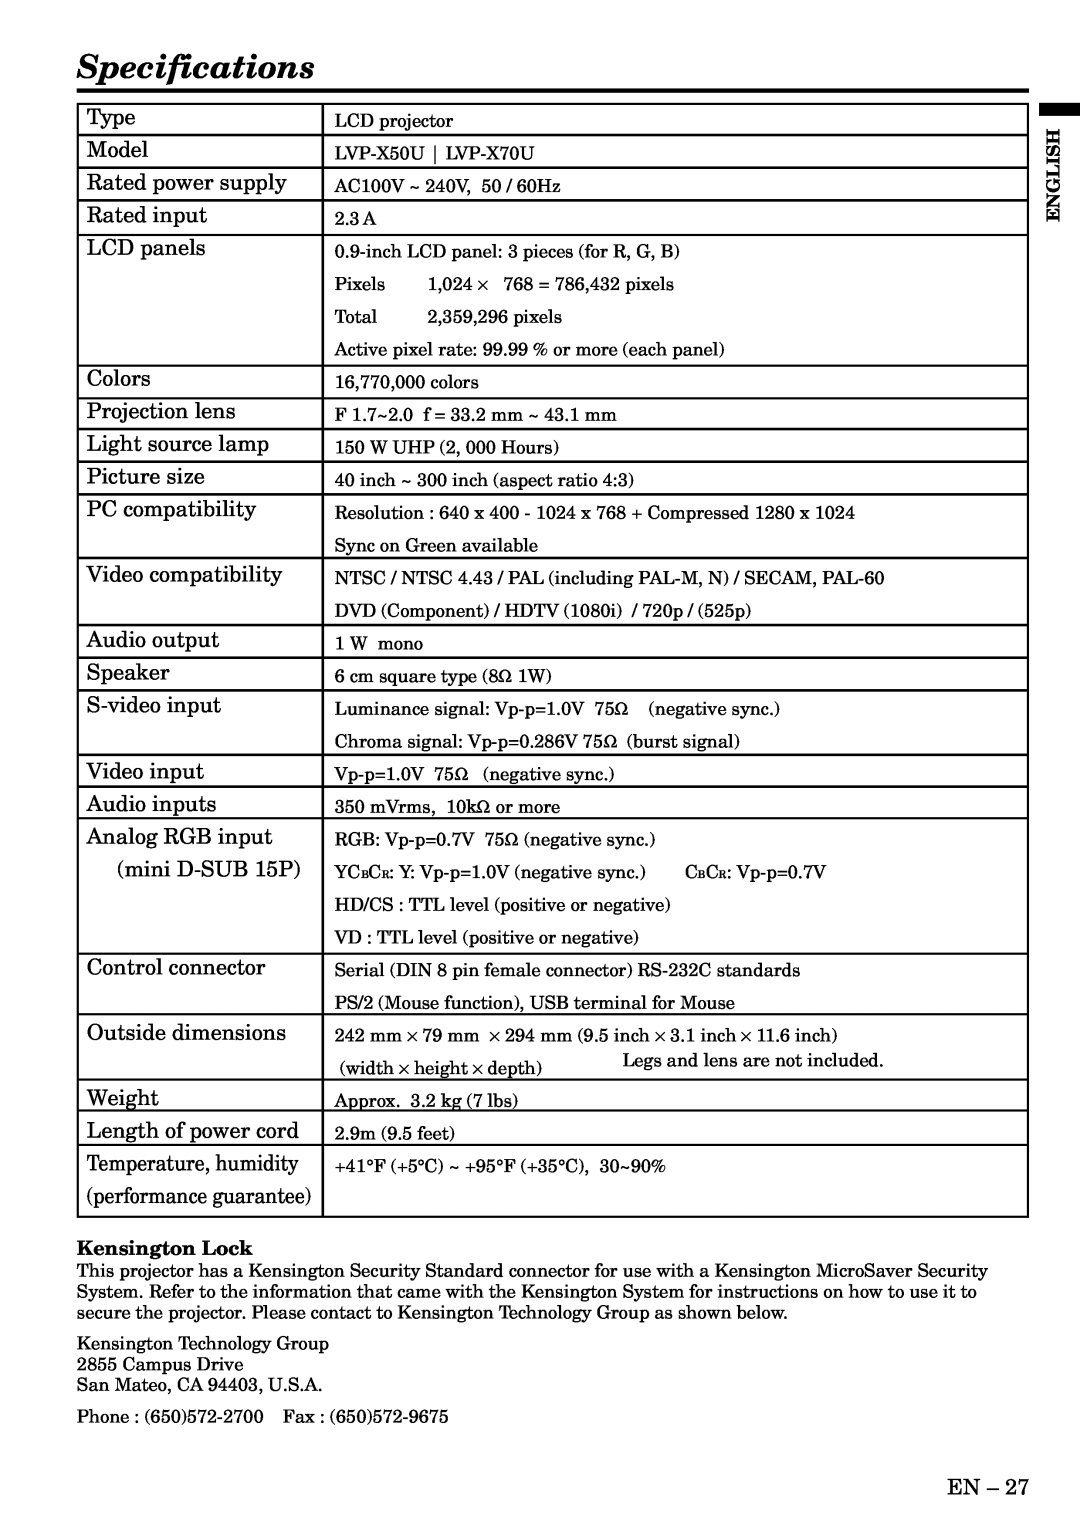 Mitsubishi Electronics X70U user manual Specifications, Kensington Lock 